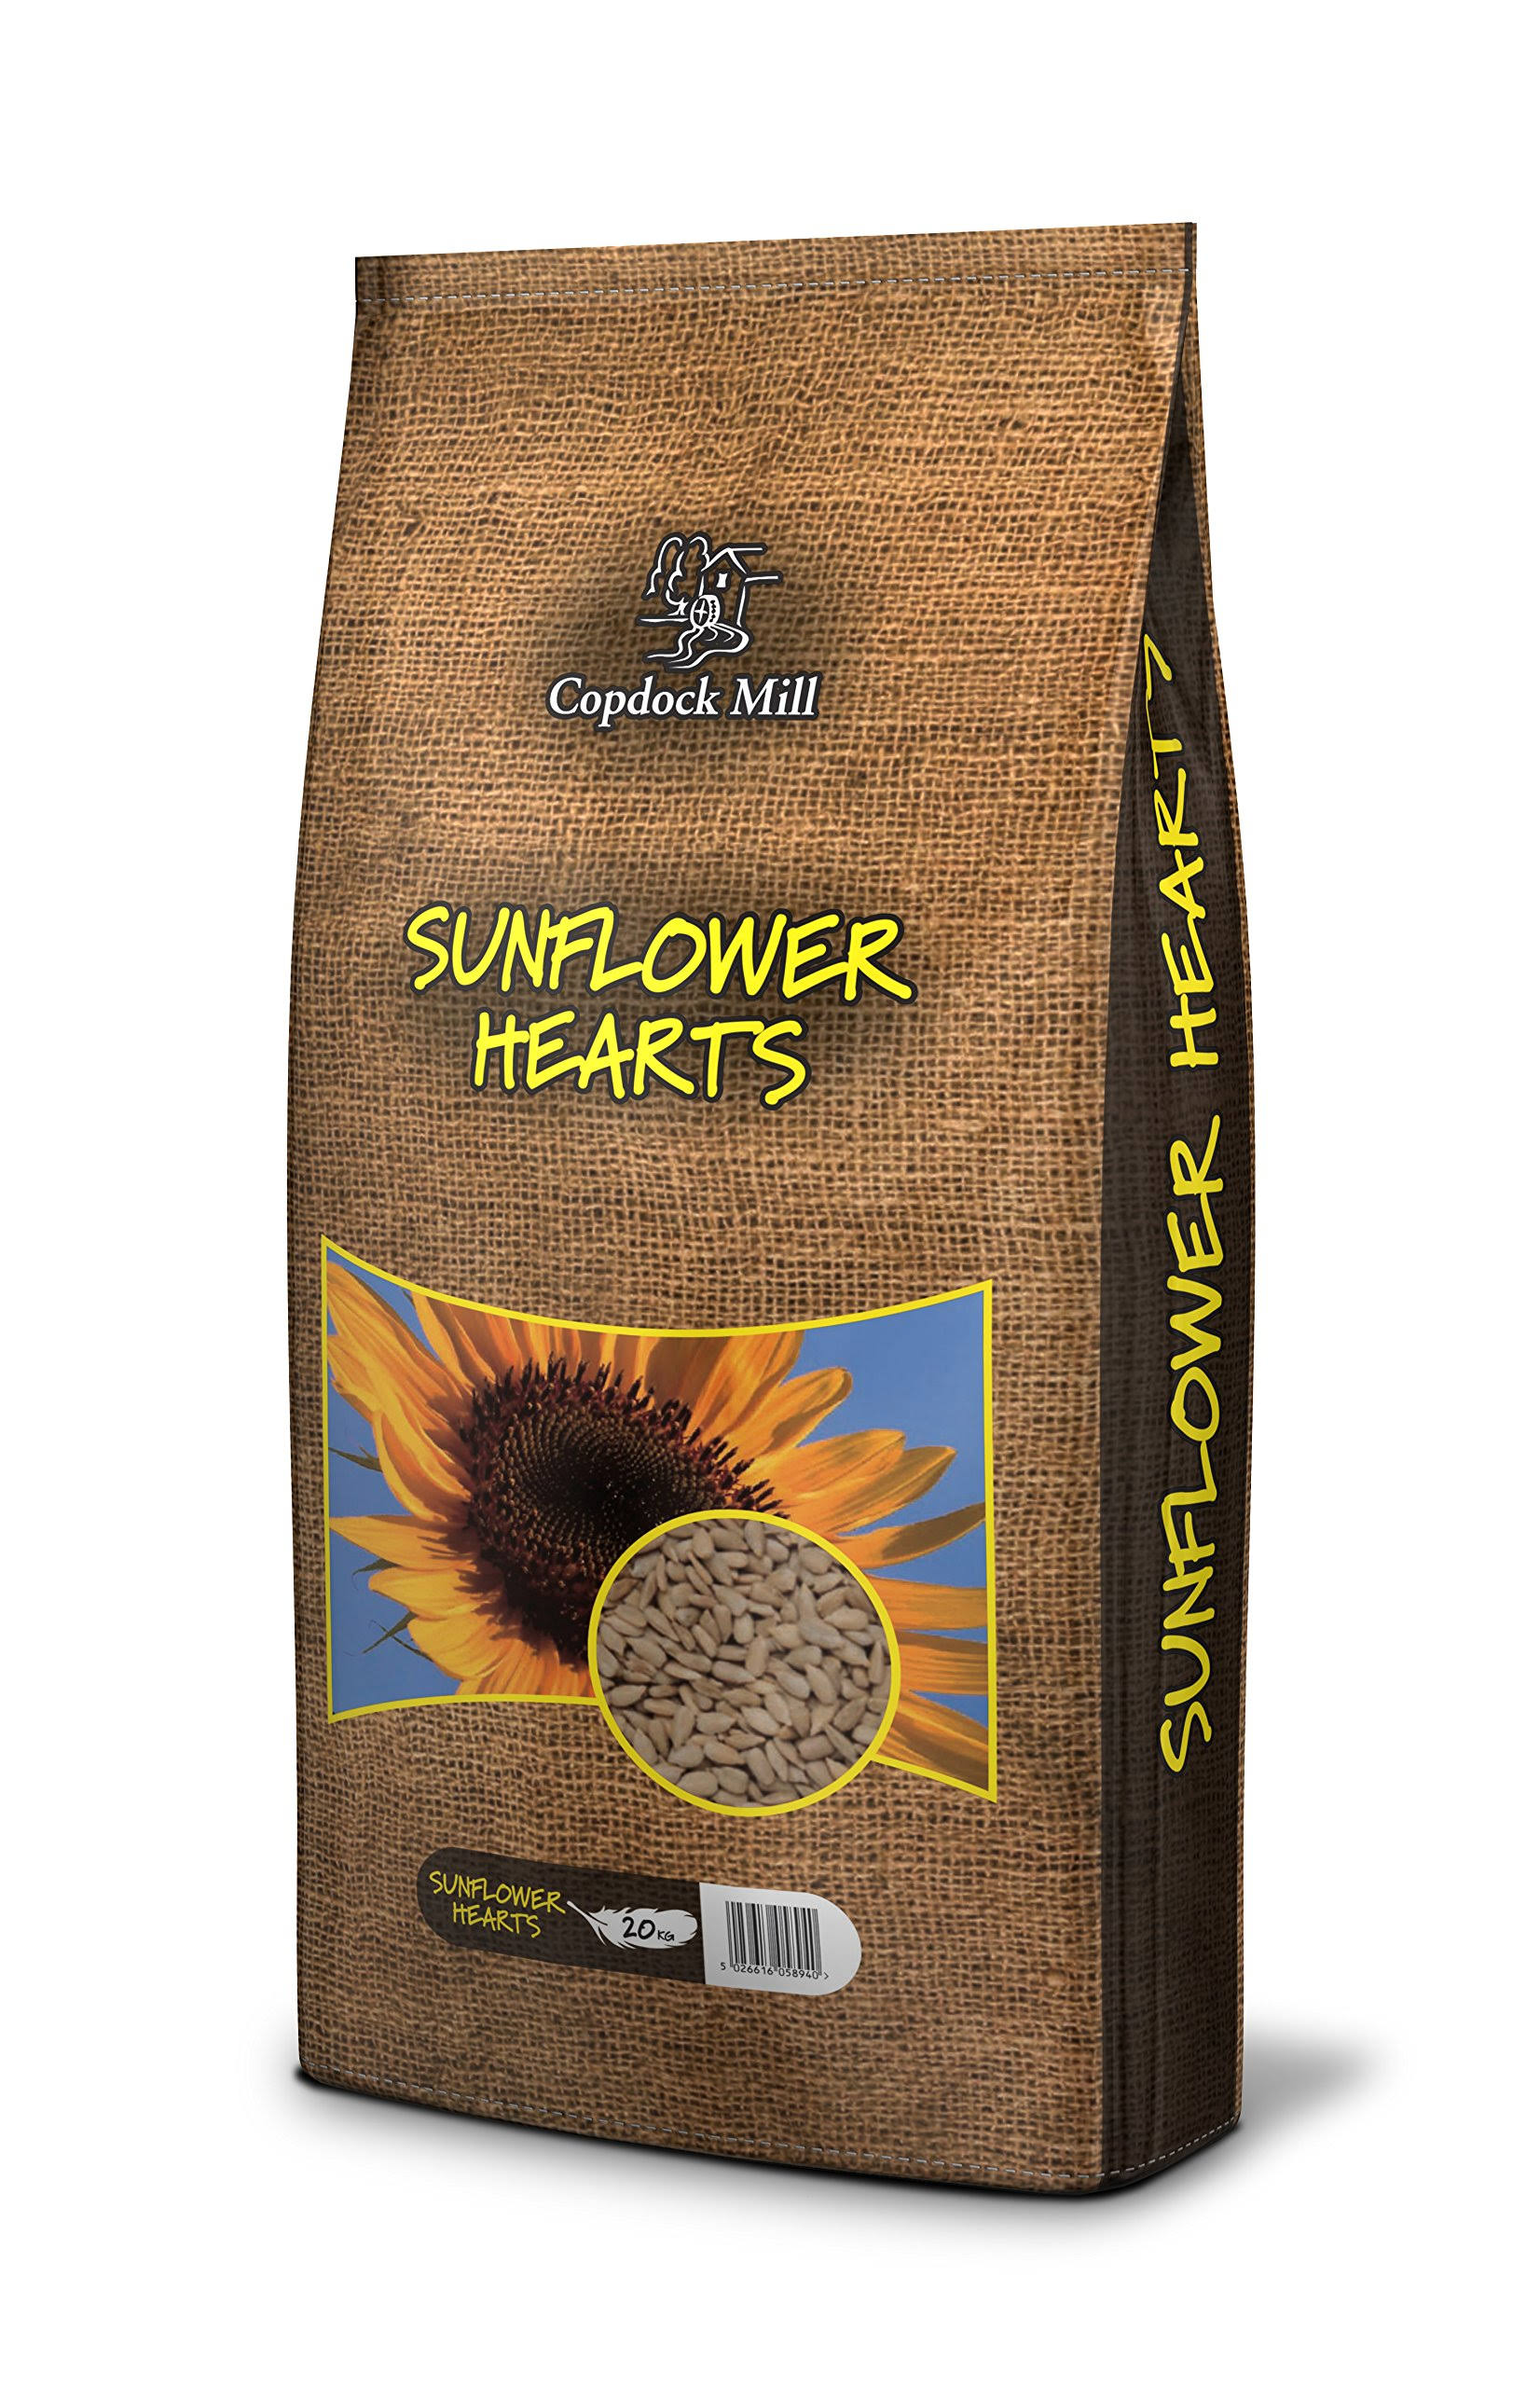 Copdock Mill Sunflower Hearts, 20 kg